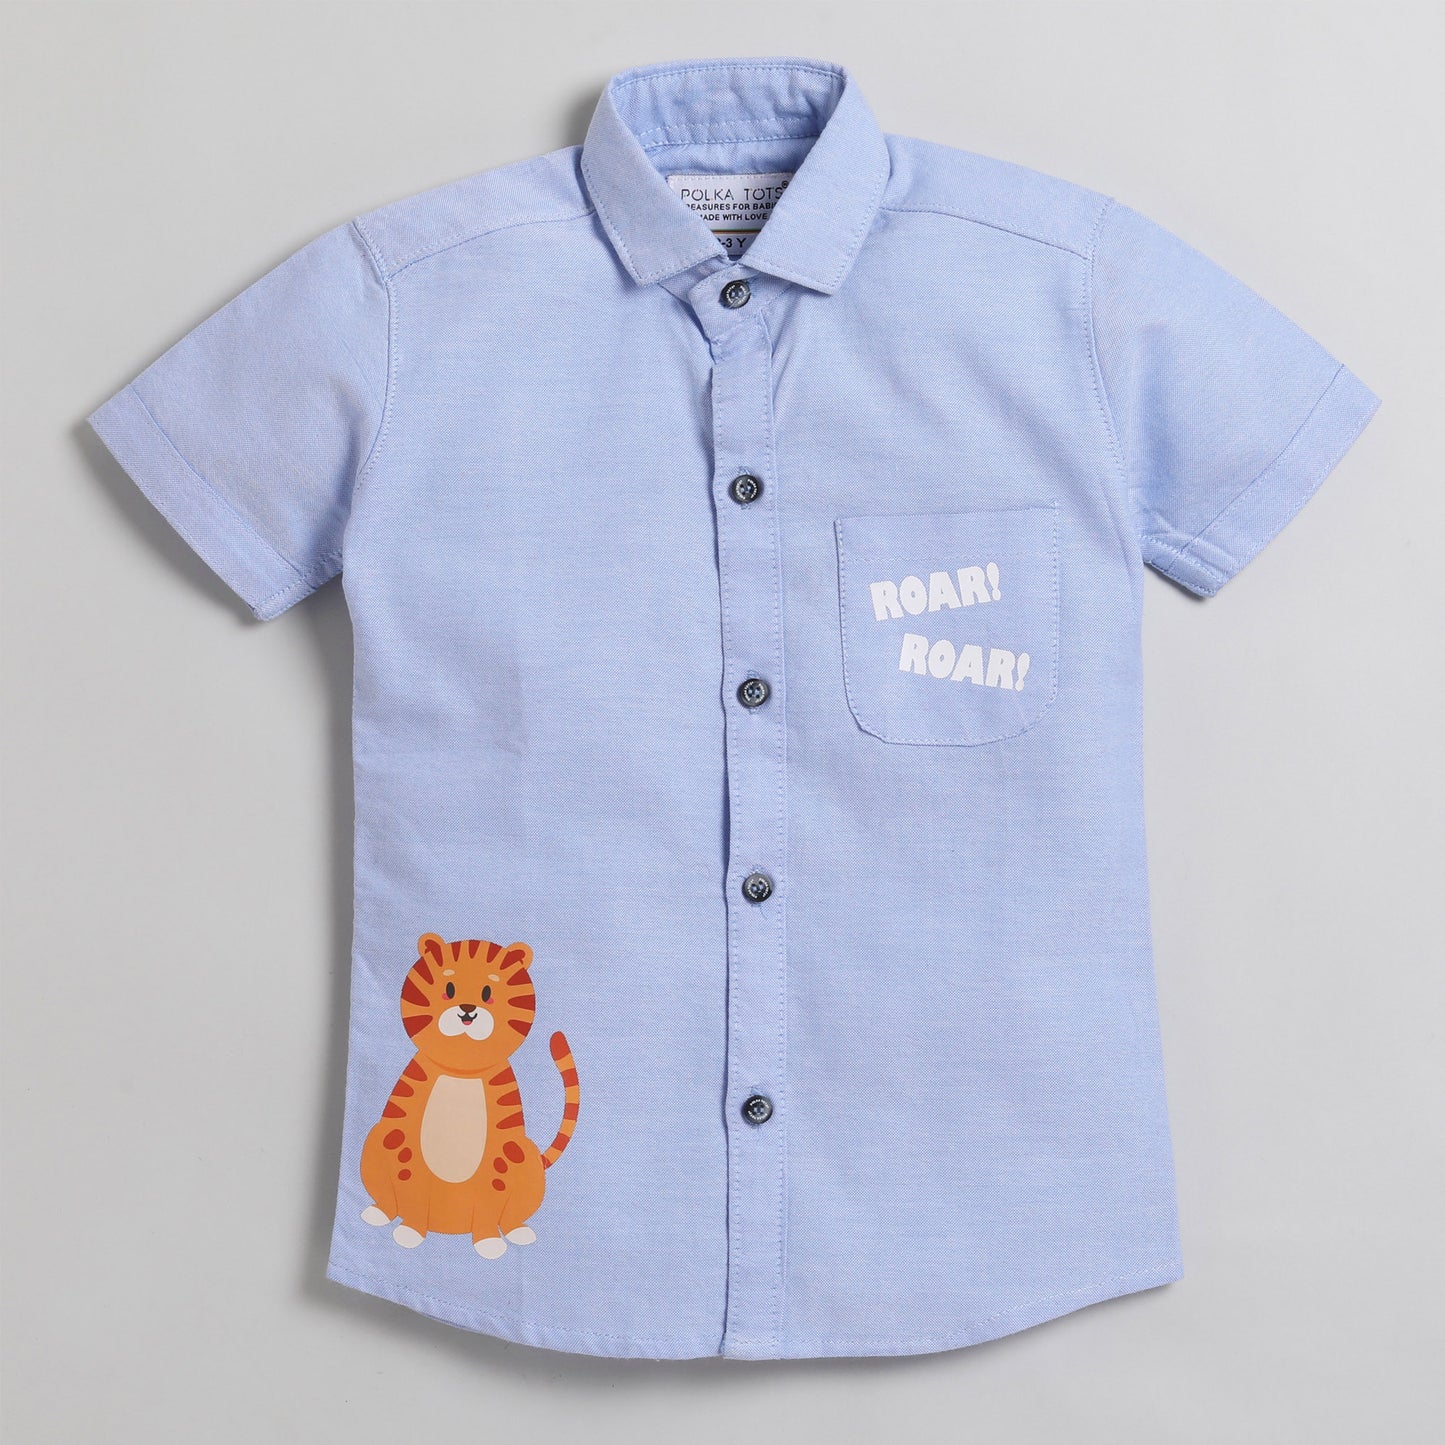 Polka Tots Half Sleeve Shirt Cute Lion With Pocket Roar Print - Blue